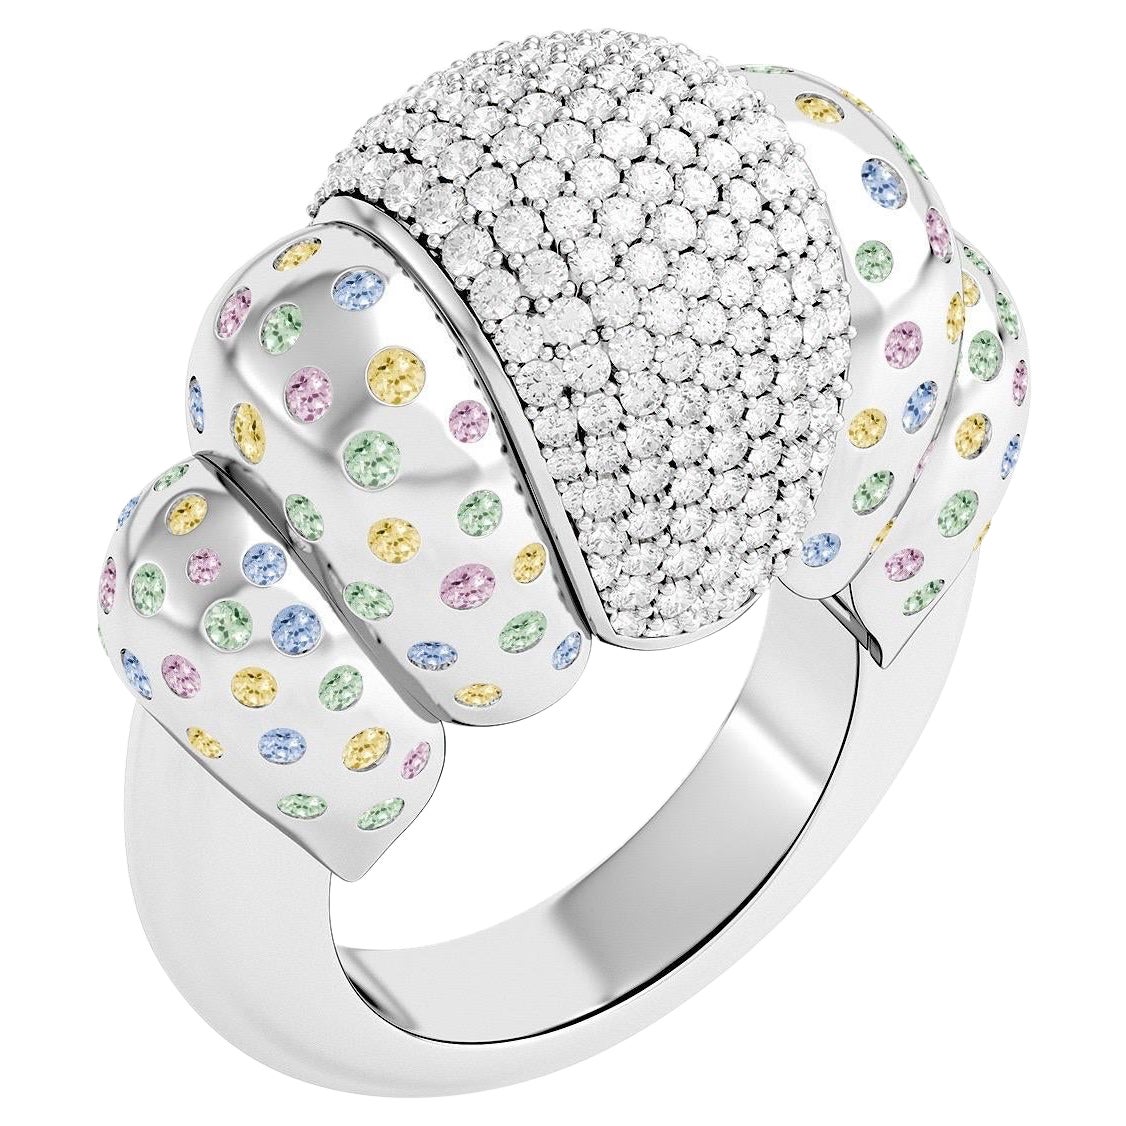 Ruben Manuel Designs “Spring” 18K WG Diamond and Sapphire Shrimp Ring For Sale